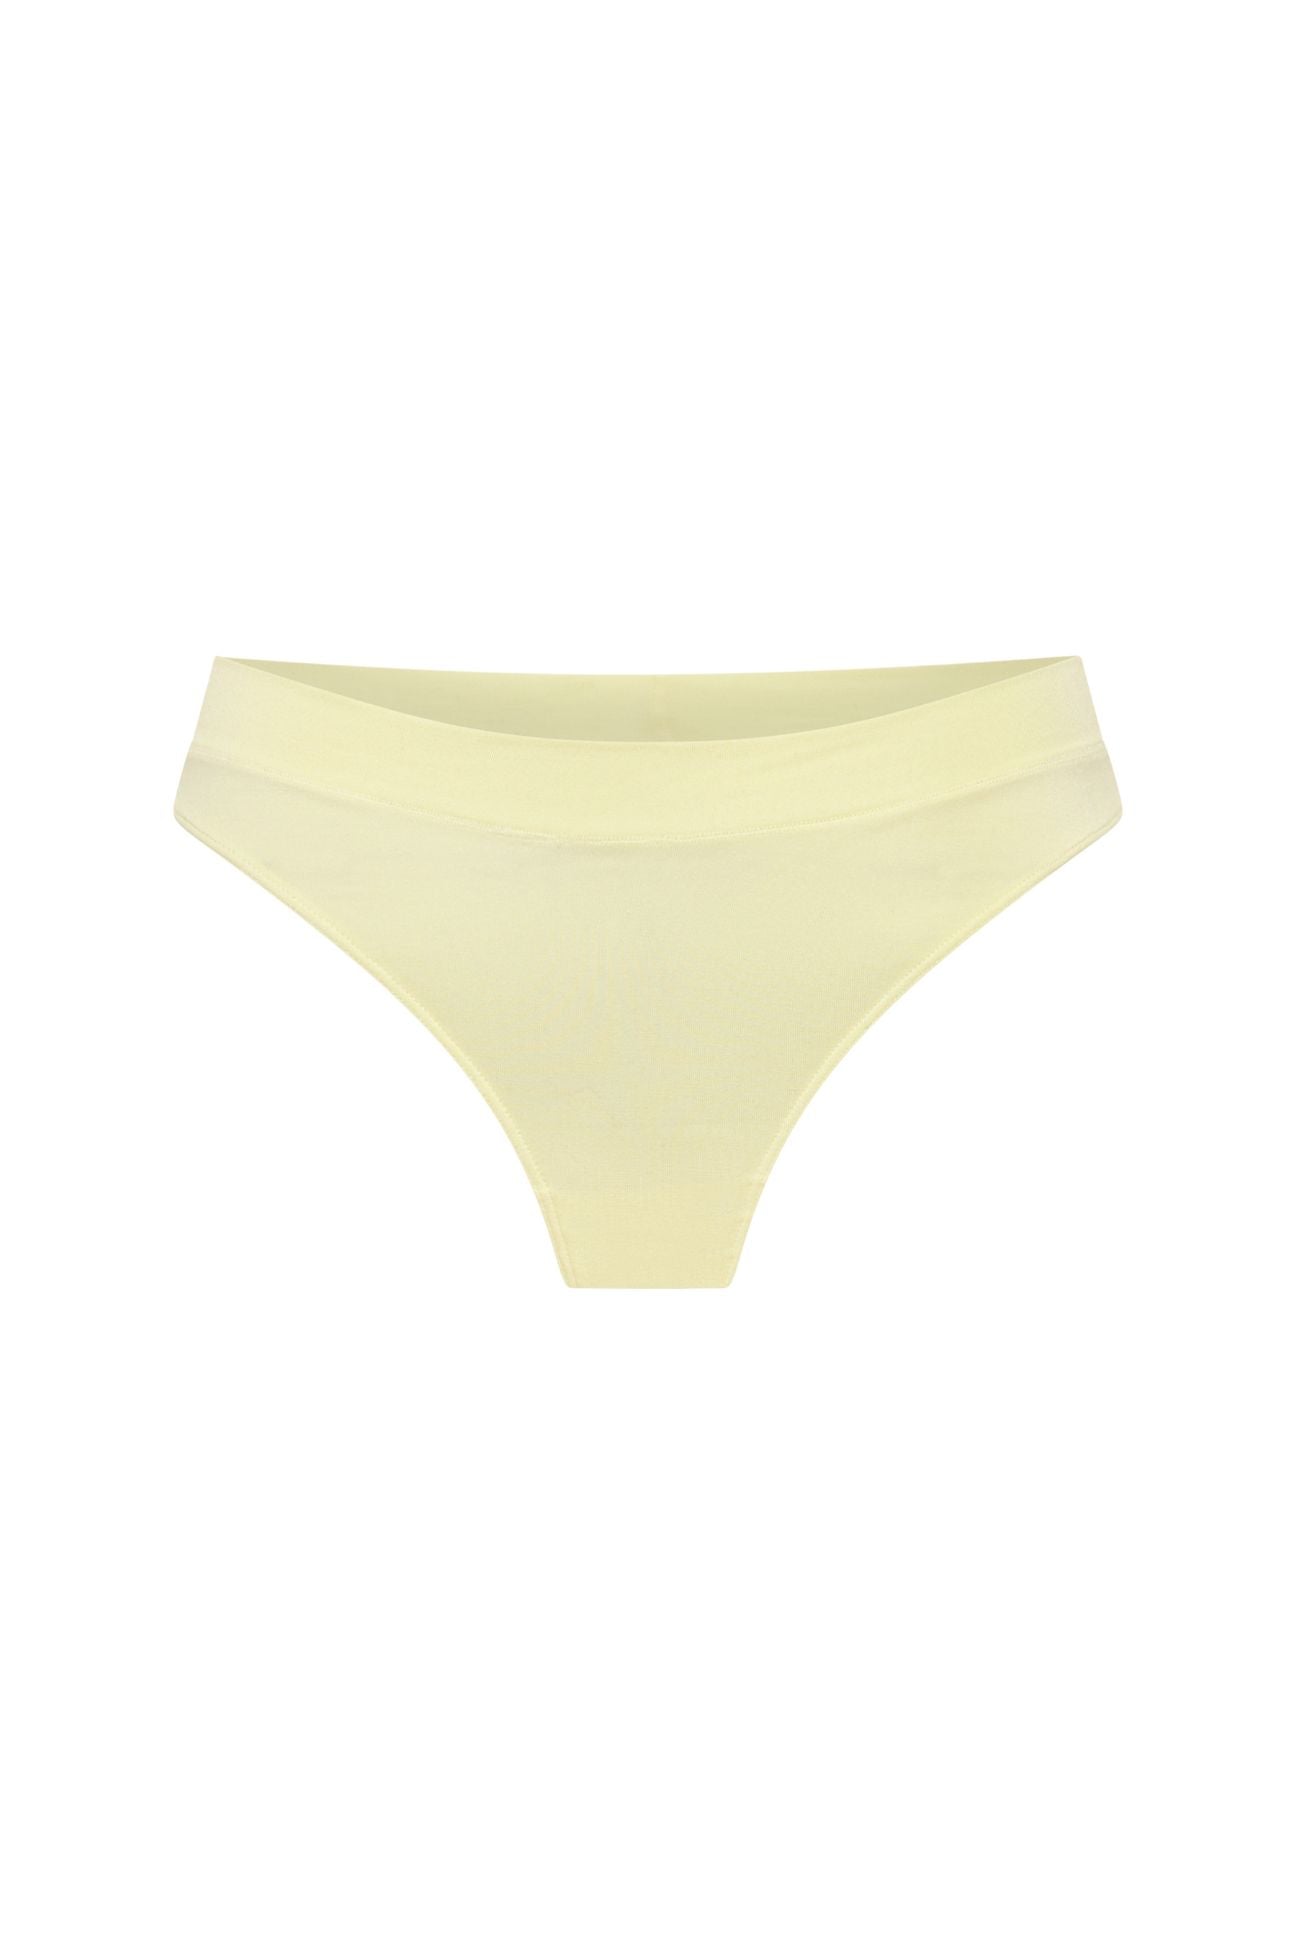 The G-String - Lemon Limited Edition, Undies - First Thing Underwear